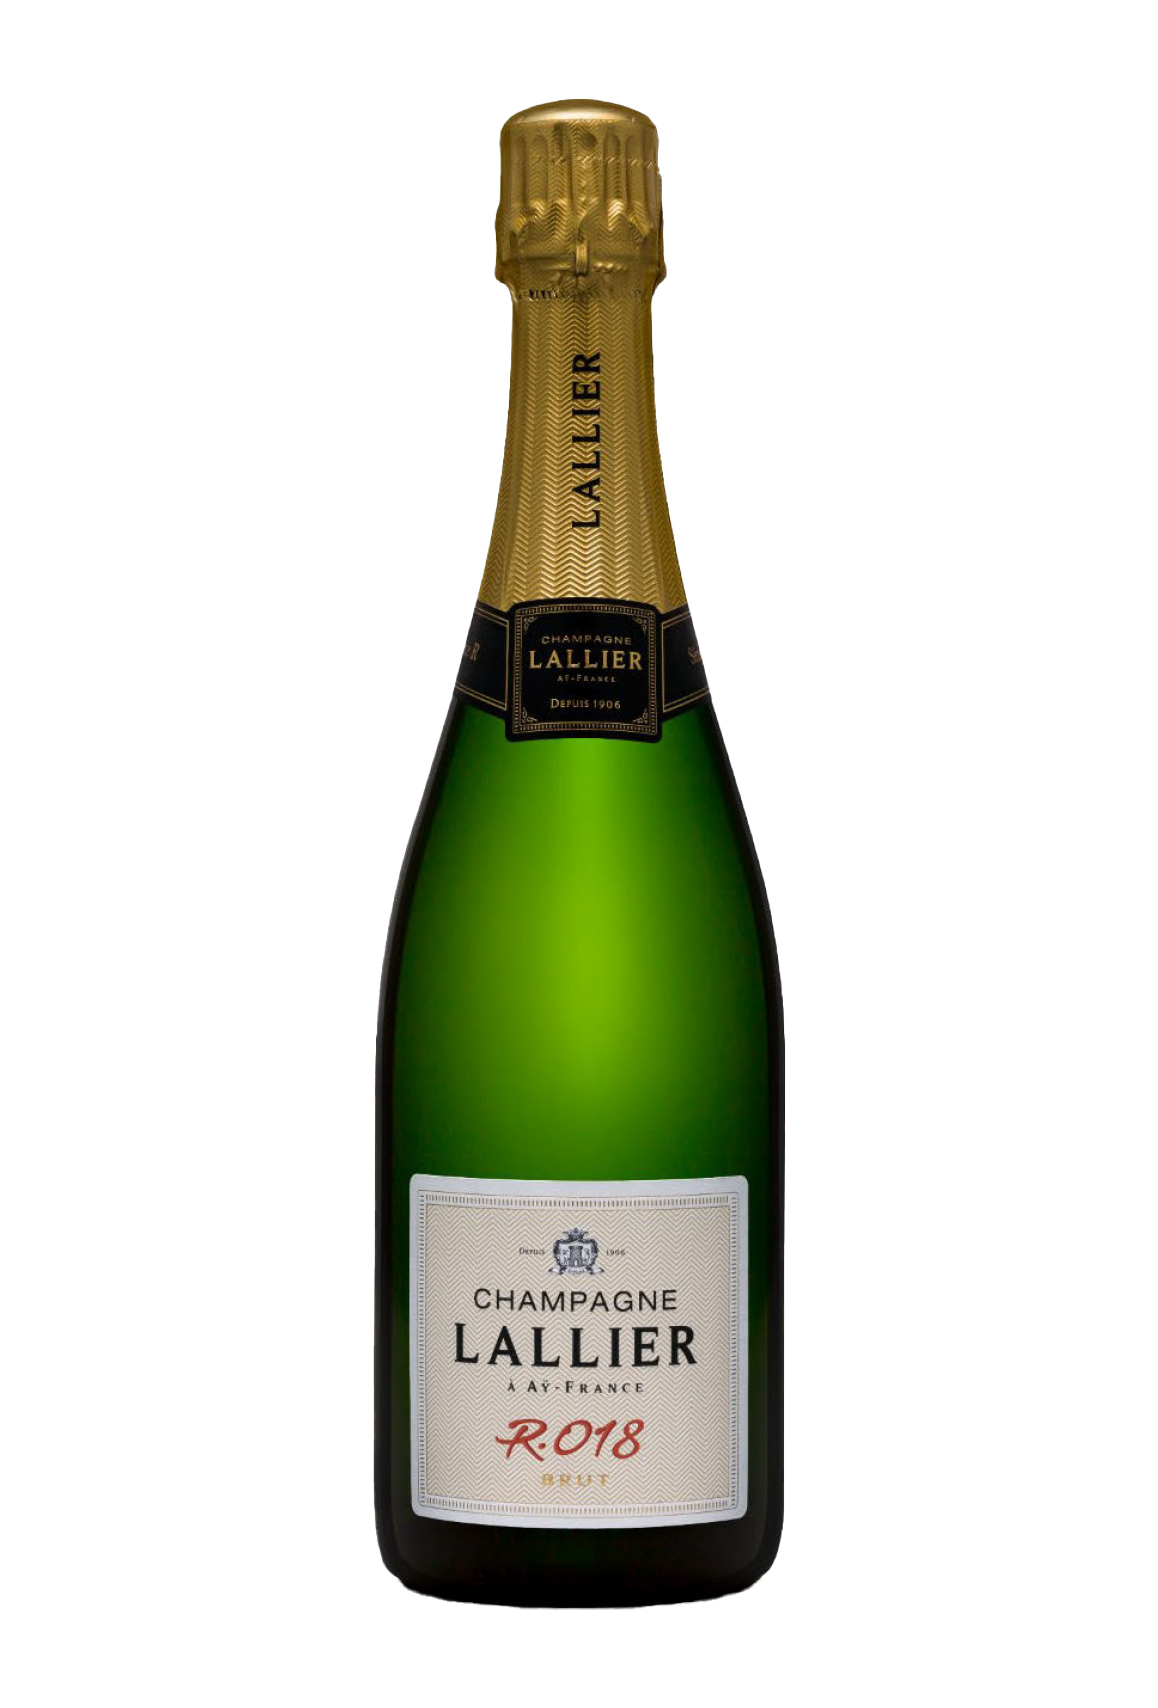 Champagne Lallier R.018 Vintage